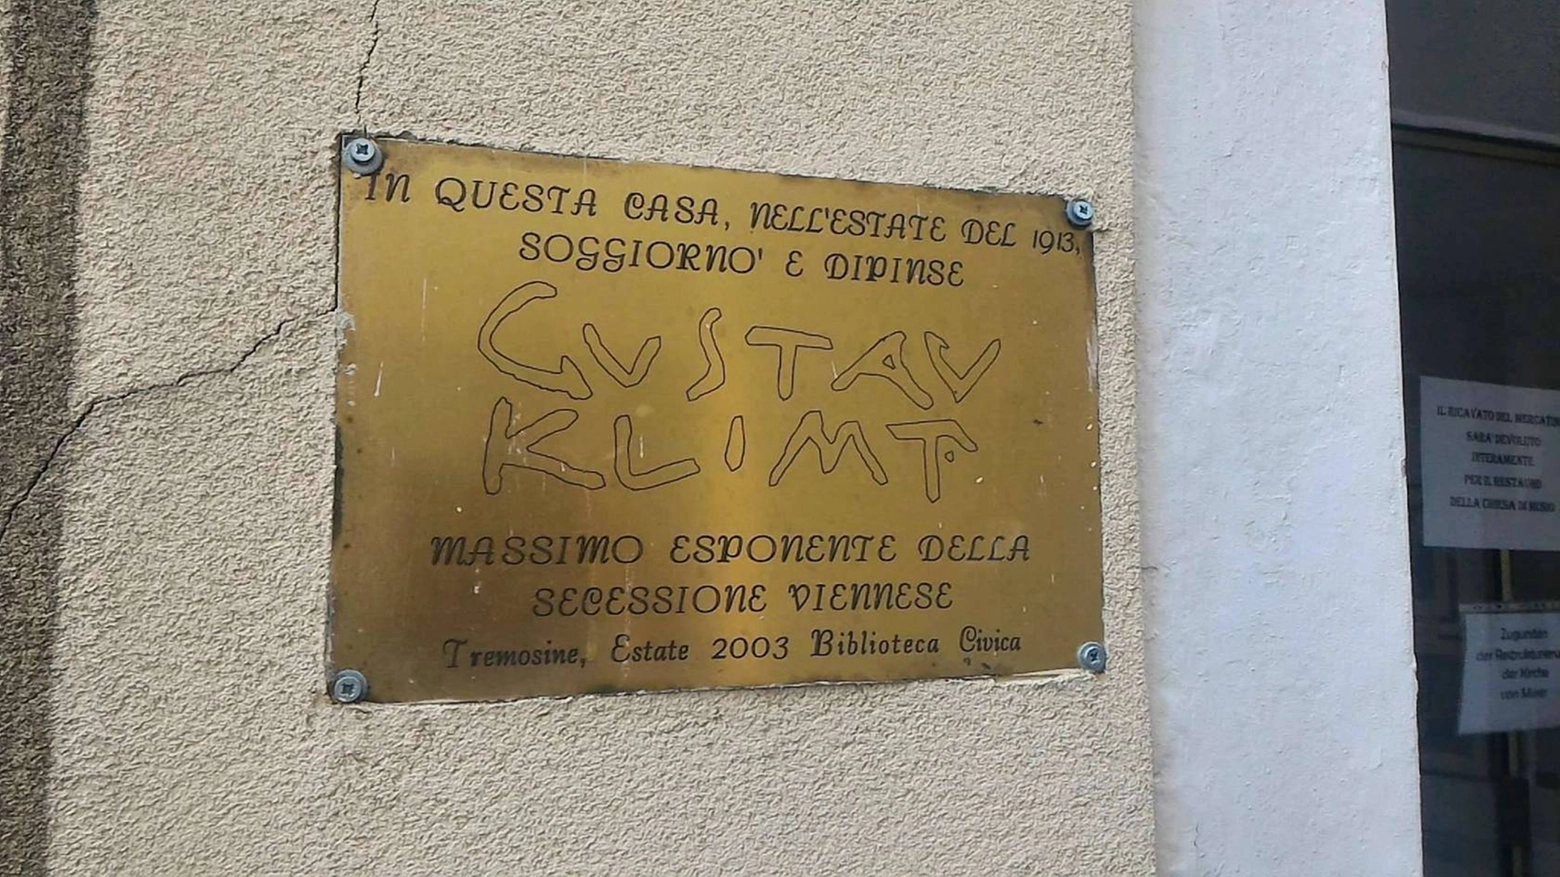 In vendita l'immobile che ospitò Gustav Klimt a Tremosine